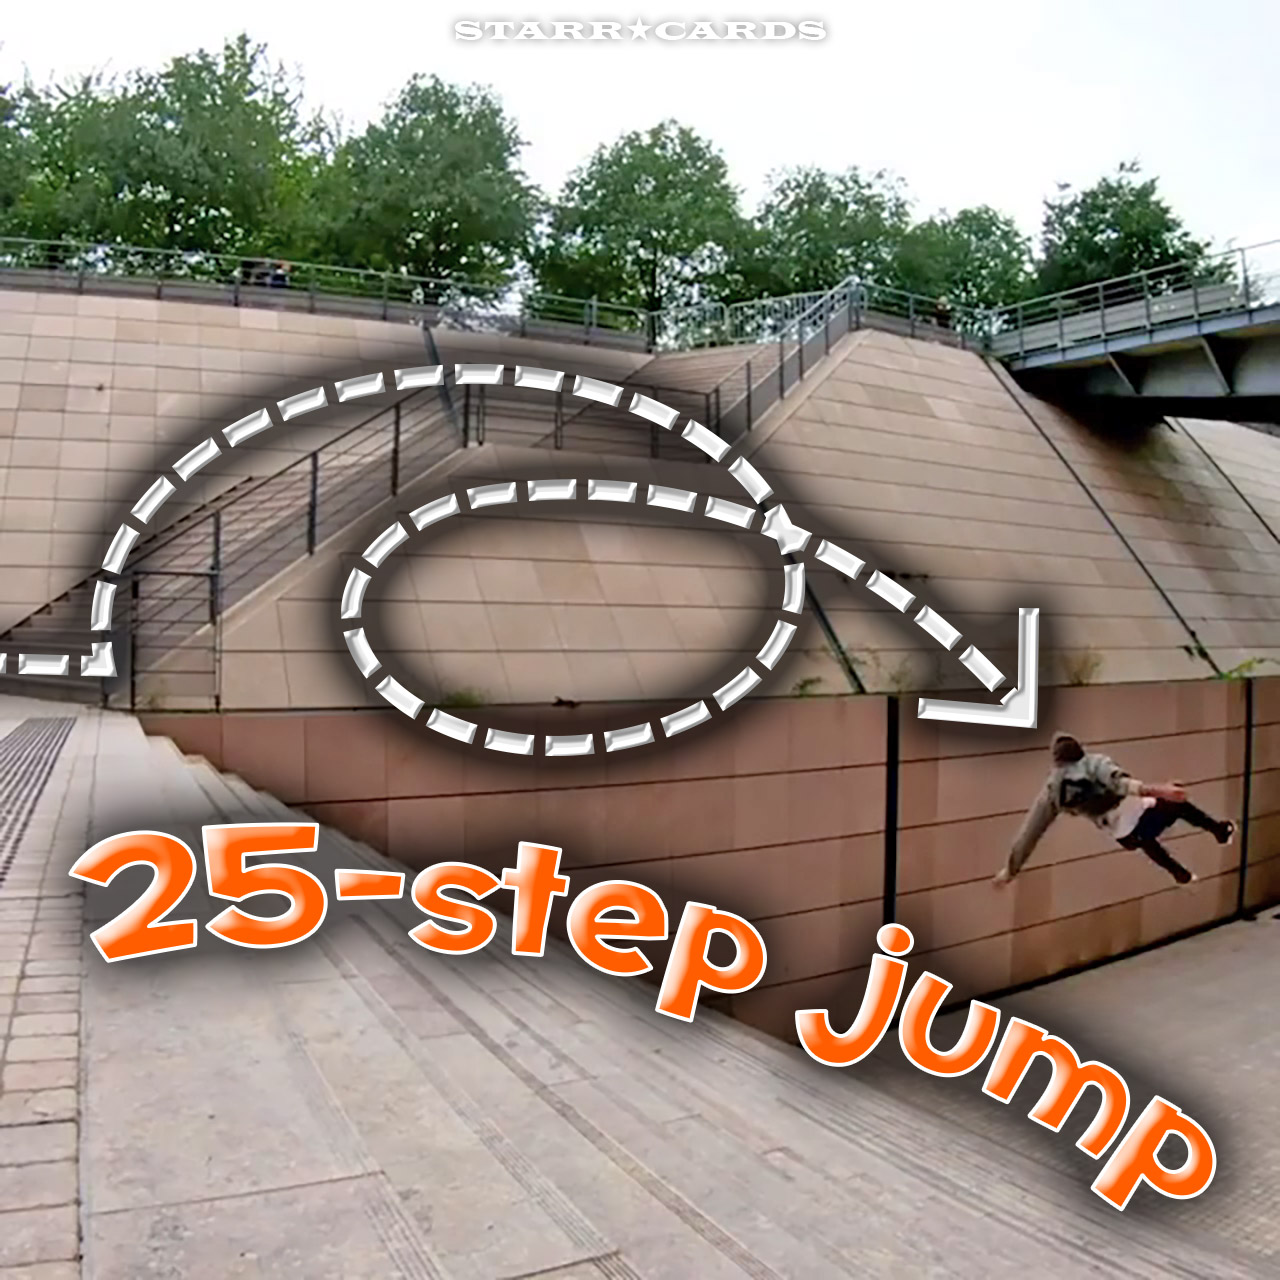 Aaron Homoki nails skateboard jump down Lyon 25-step stairs